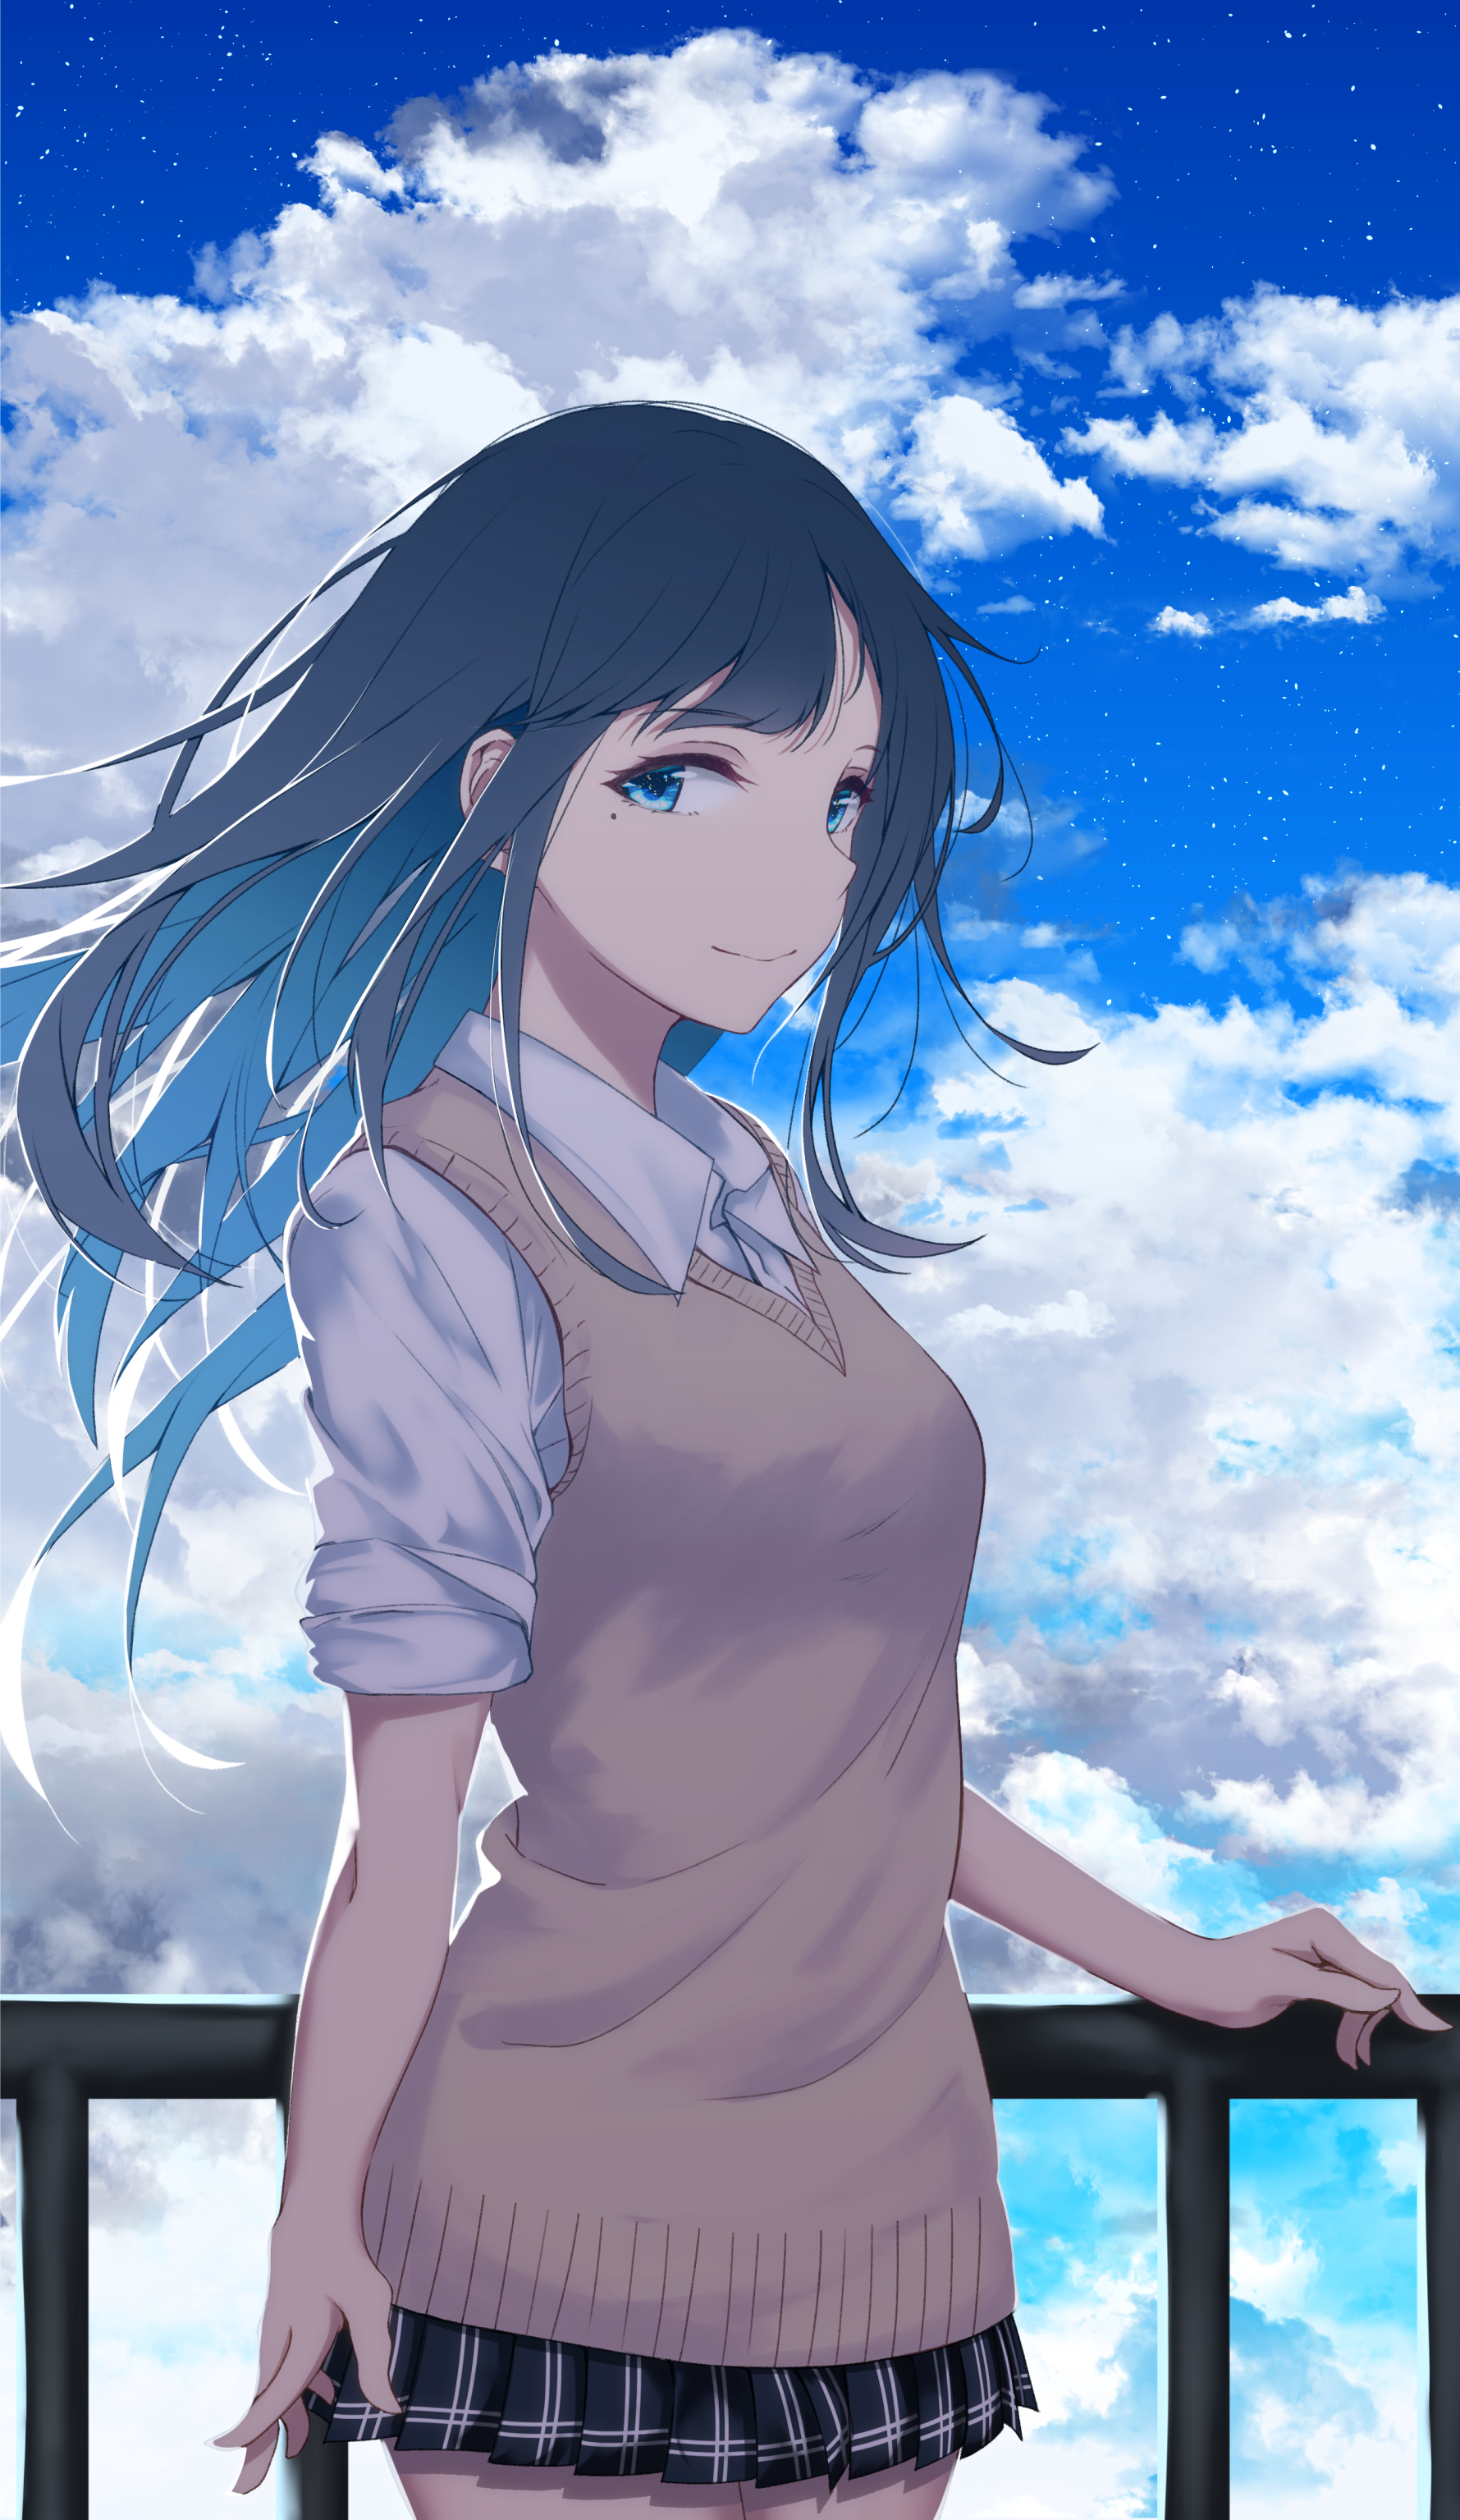 Tags: anime girls sweater sky clouds long hair blue eyes blue hair